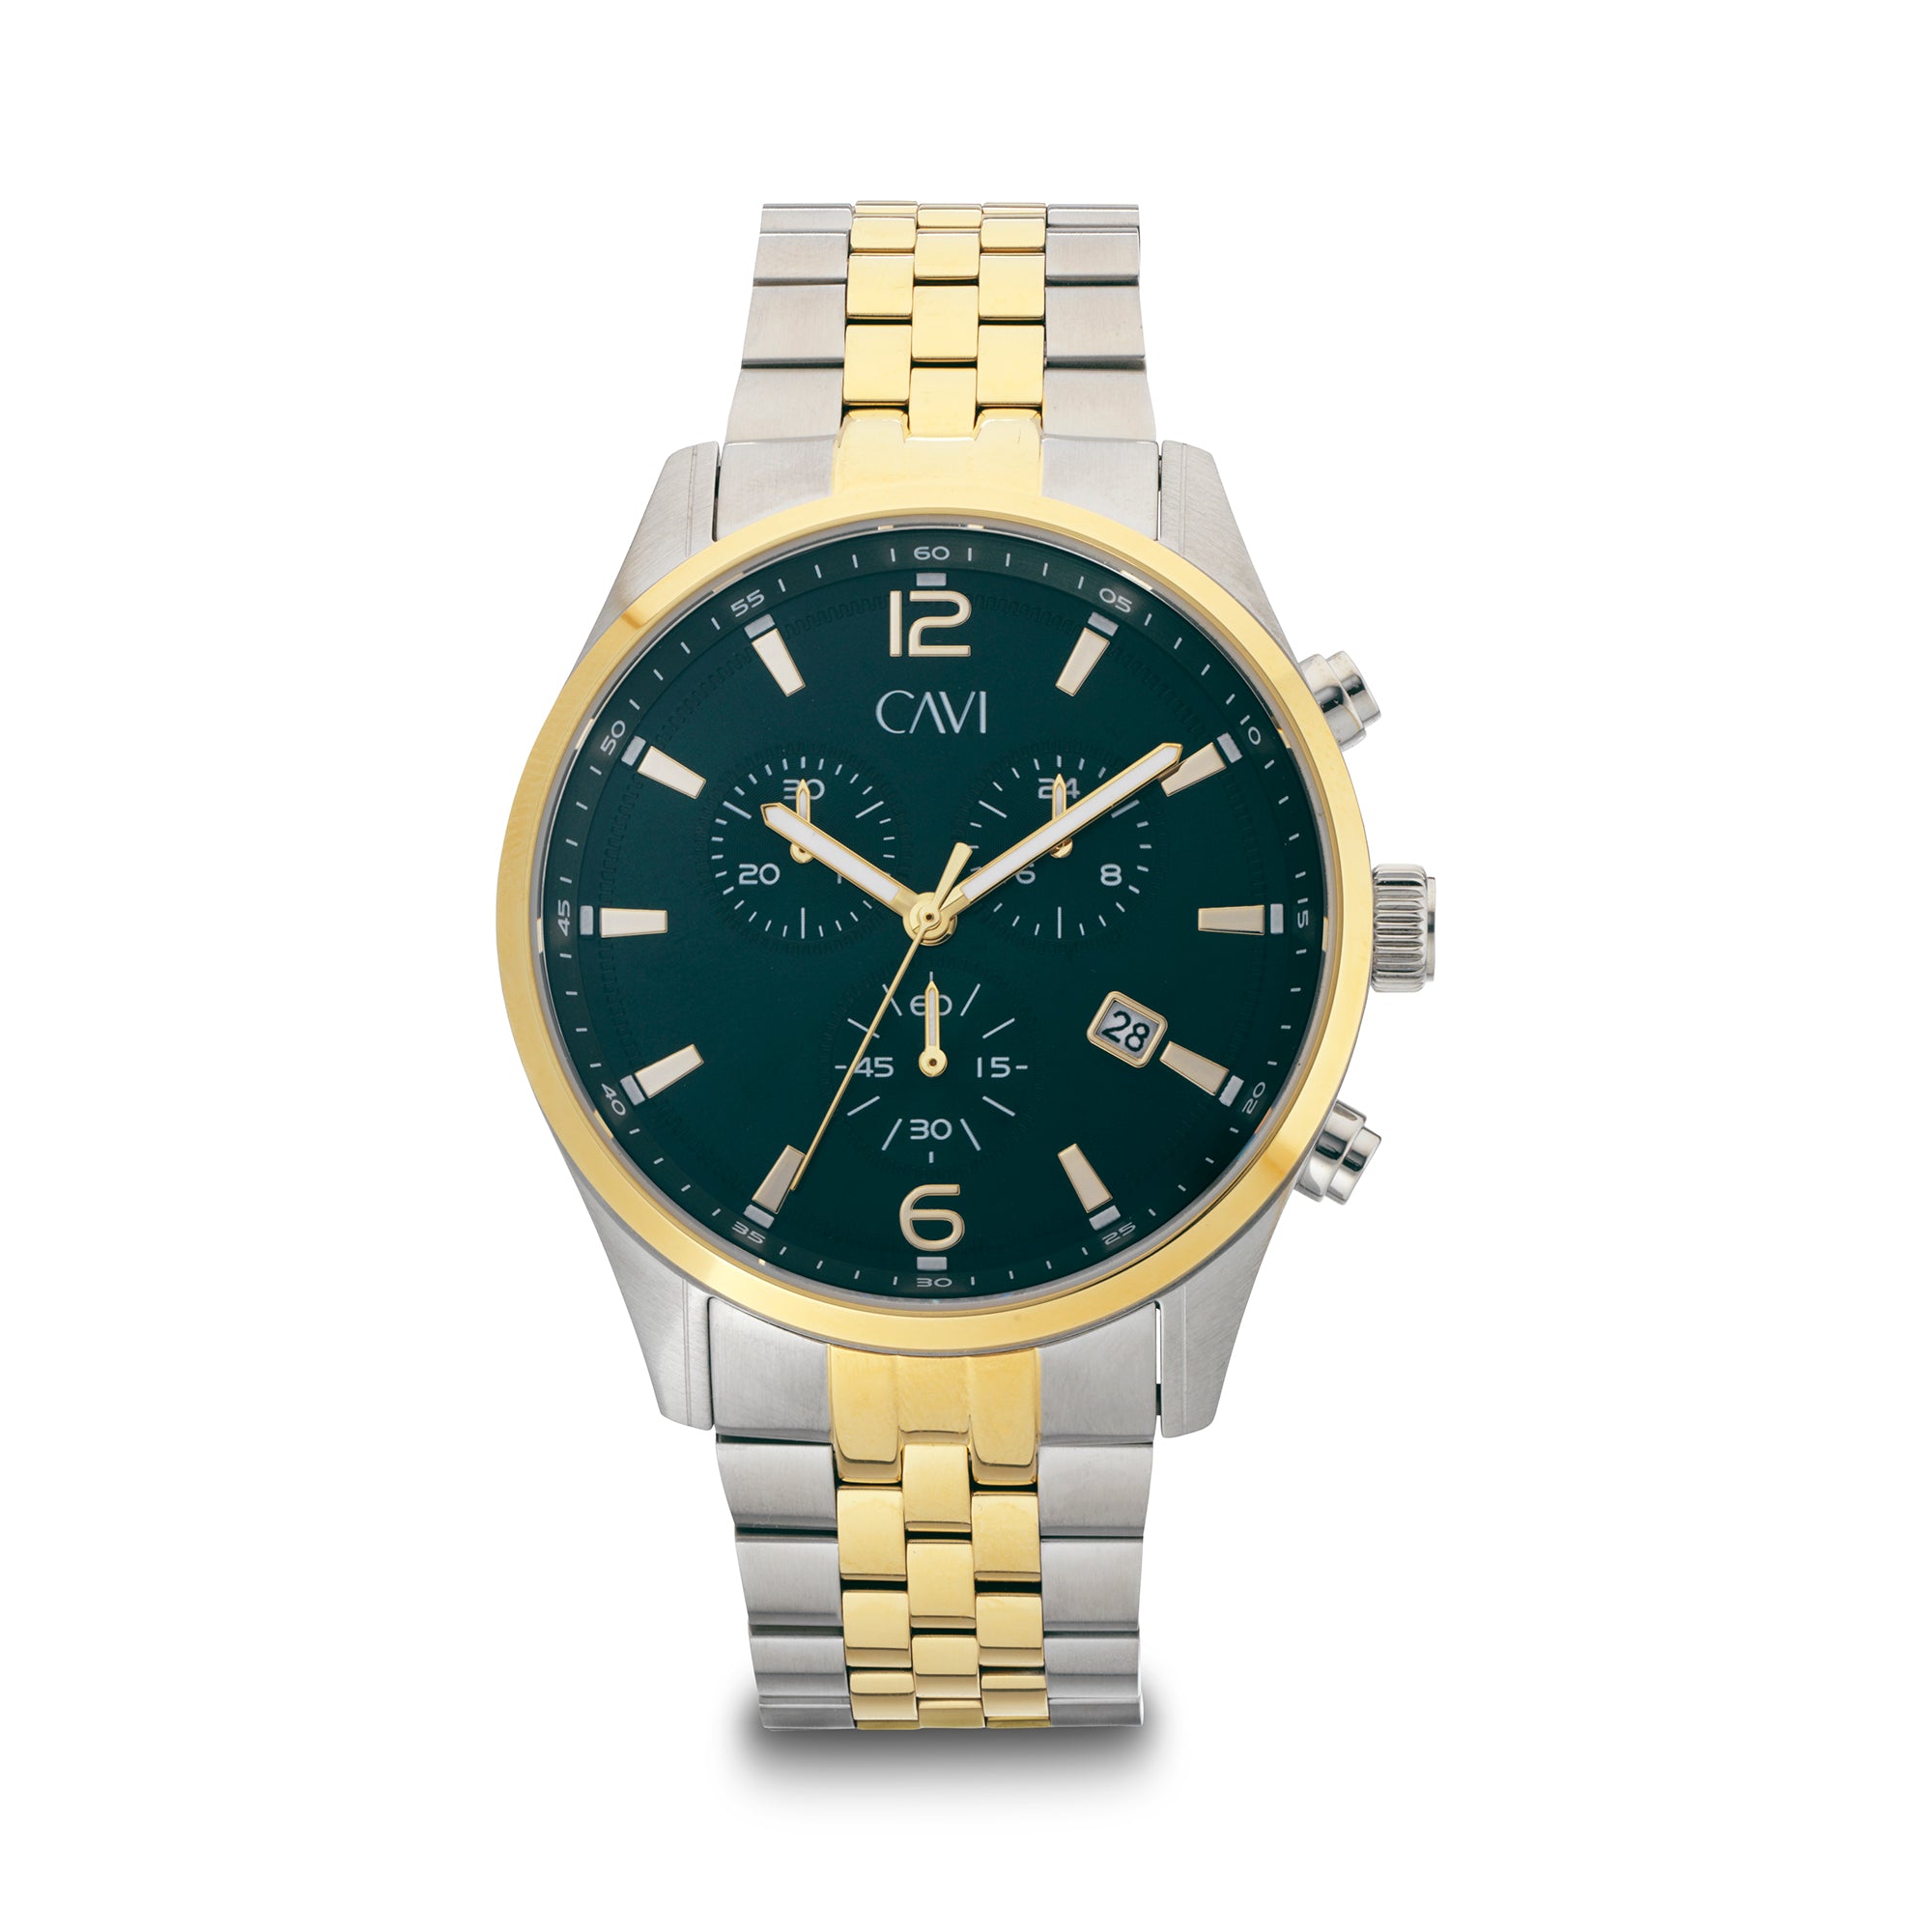 Billede af CAVI Watches - Apollo Green ur bicolor stål 43 mm